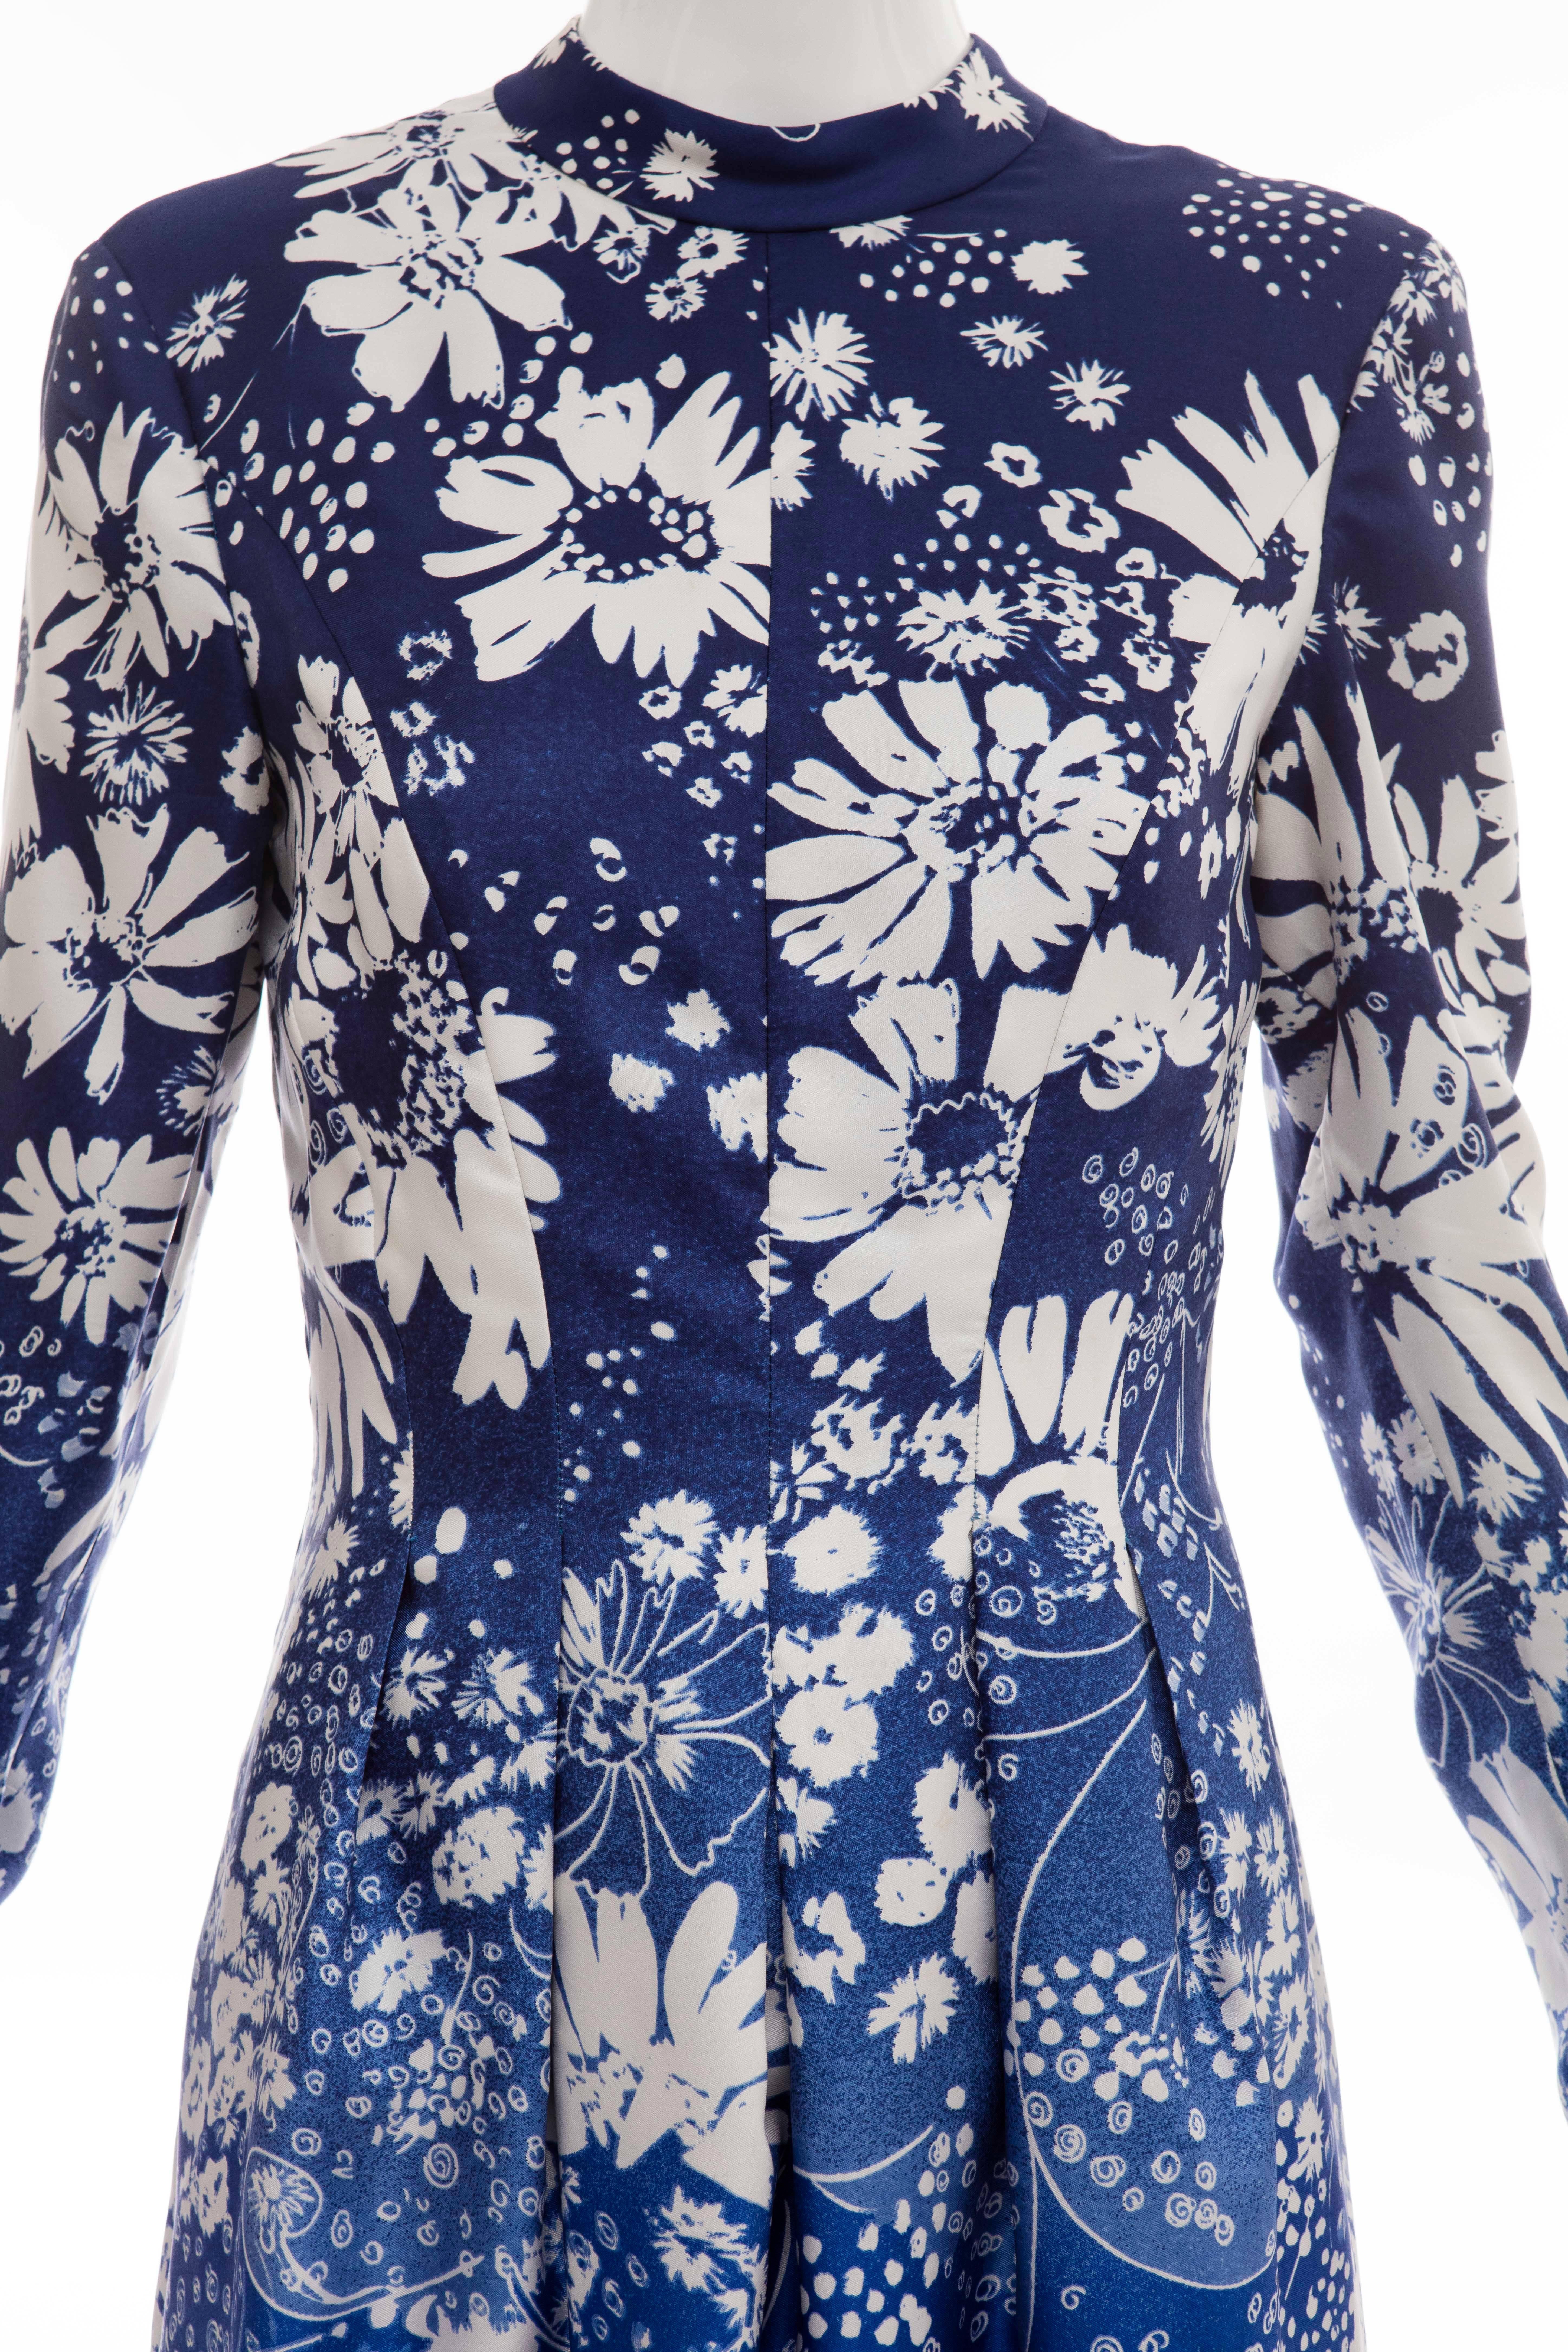 Pauline Trigere Navy Blue Ombre Silk Floral Long Sleeve Dress, Circa 1980's 2